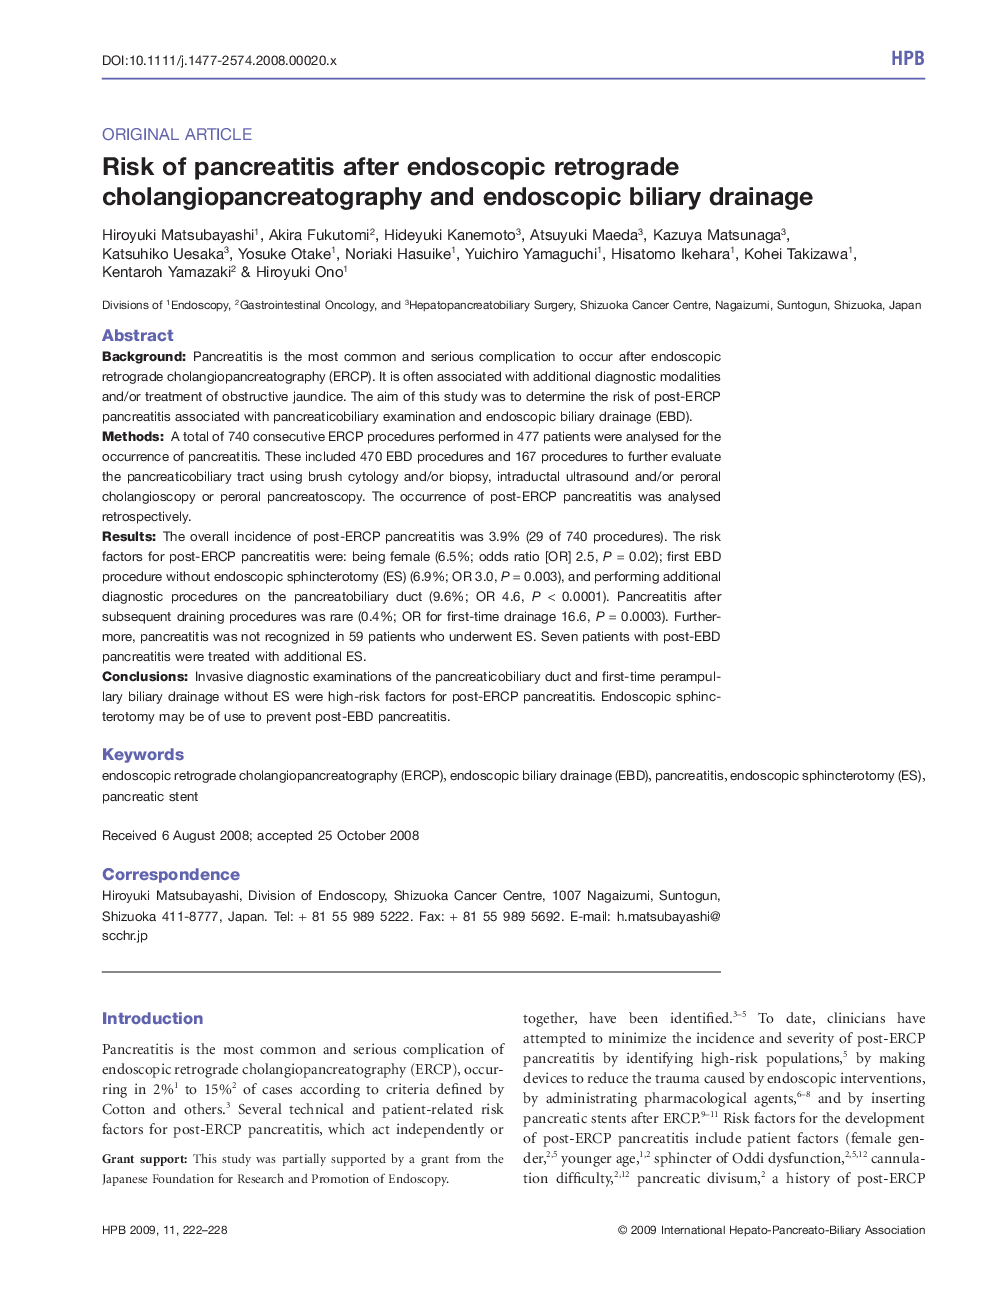 Risk of pancreatitis after endoscopic retrograde cholangiopancreatography and endoscopic biliary drainage